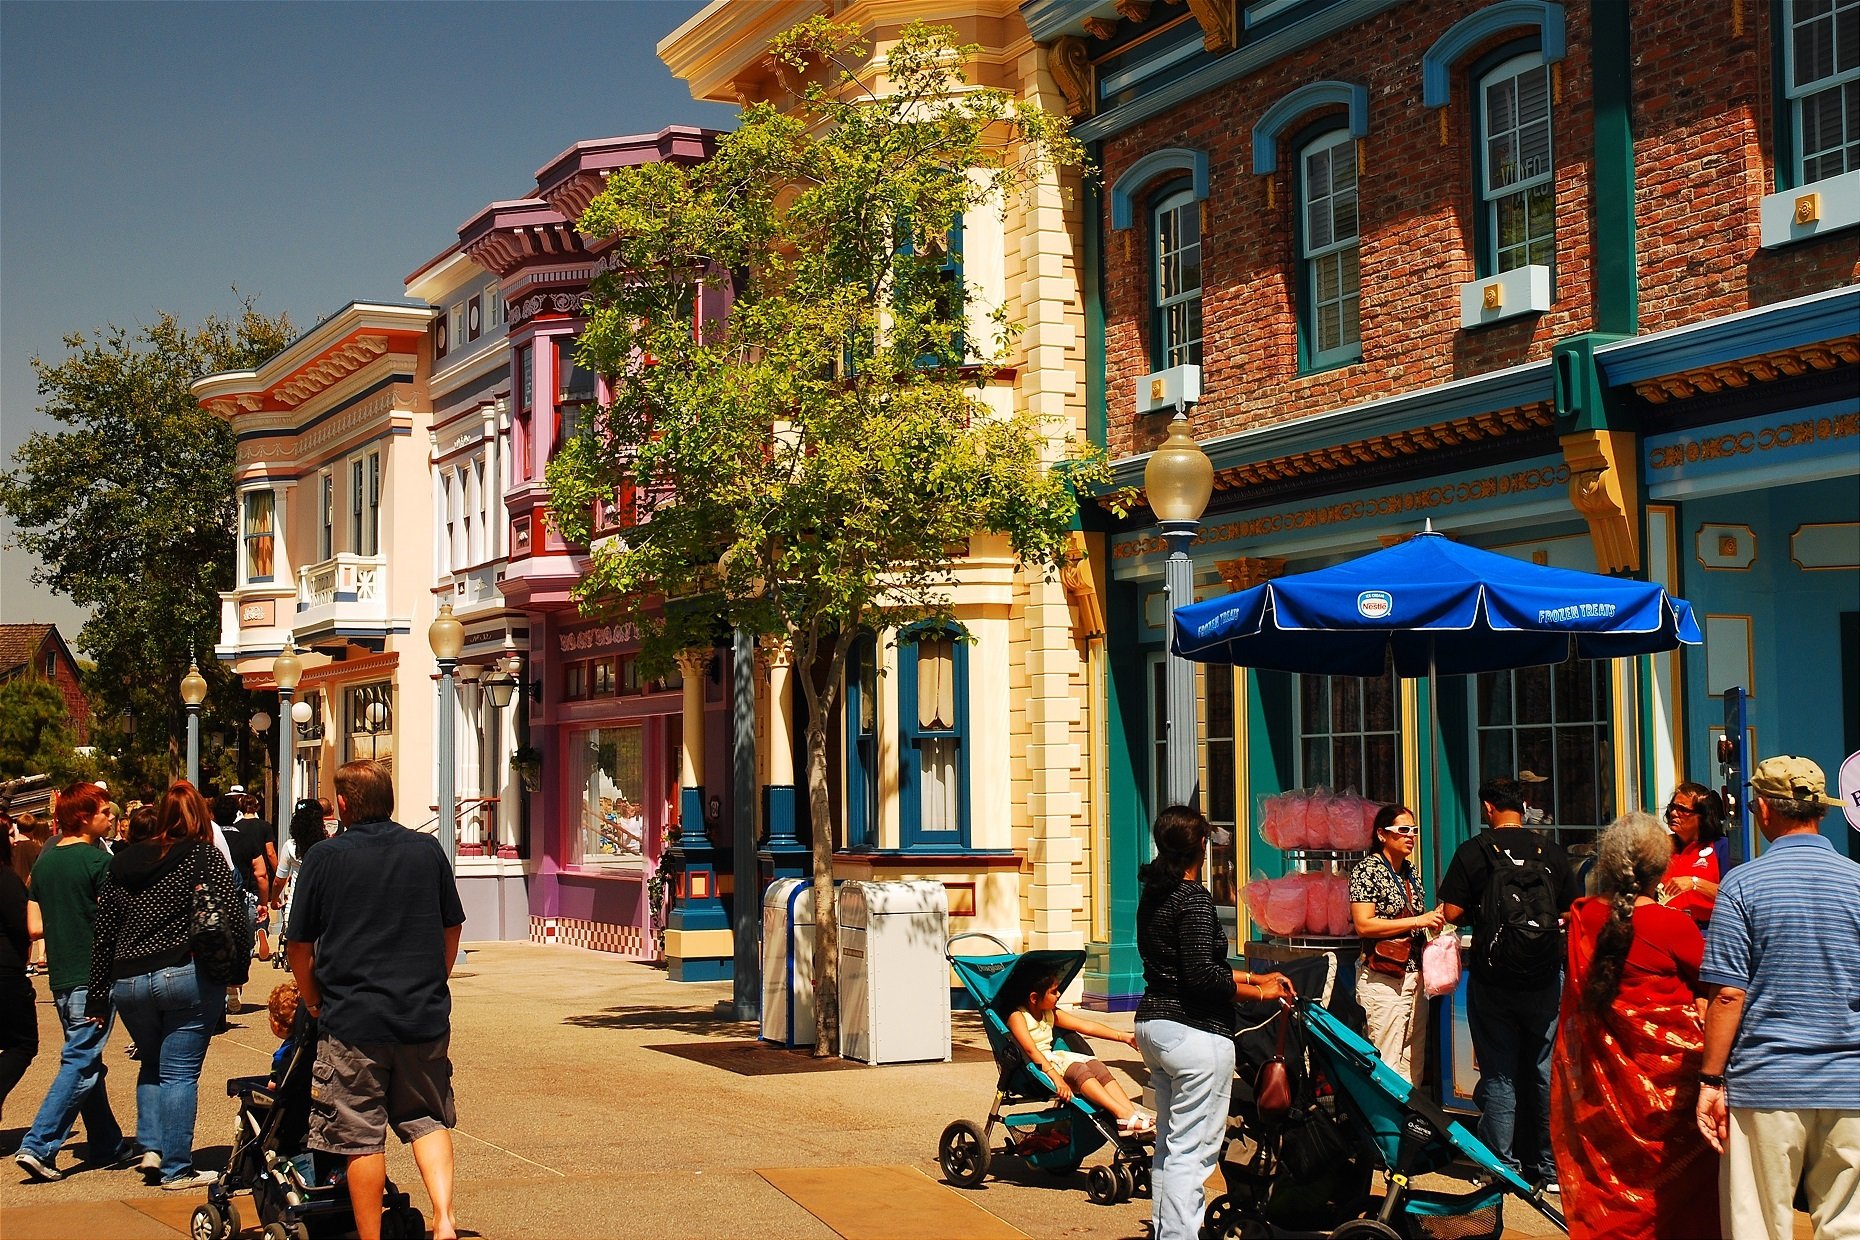 Disney main street usa in California